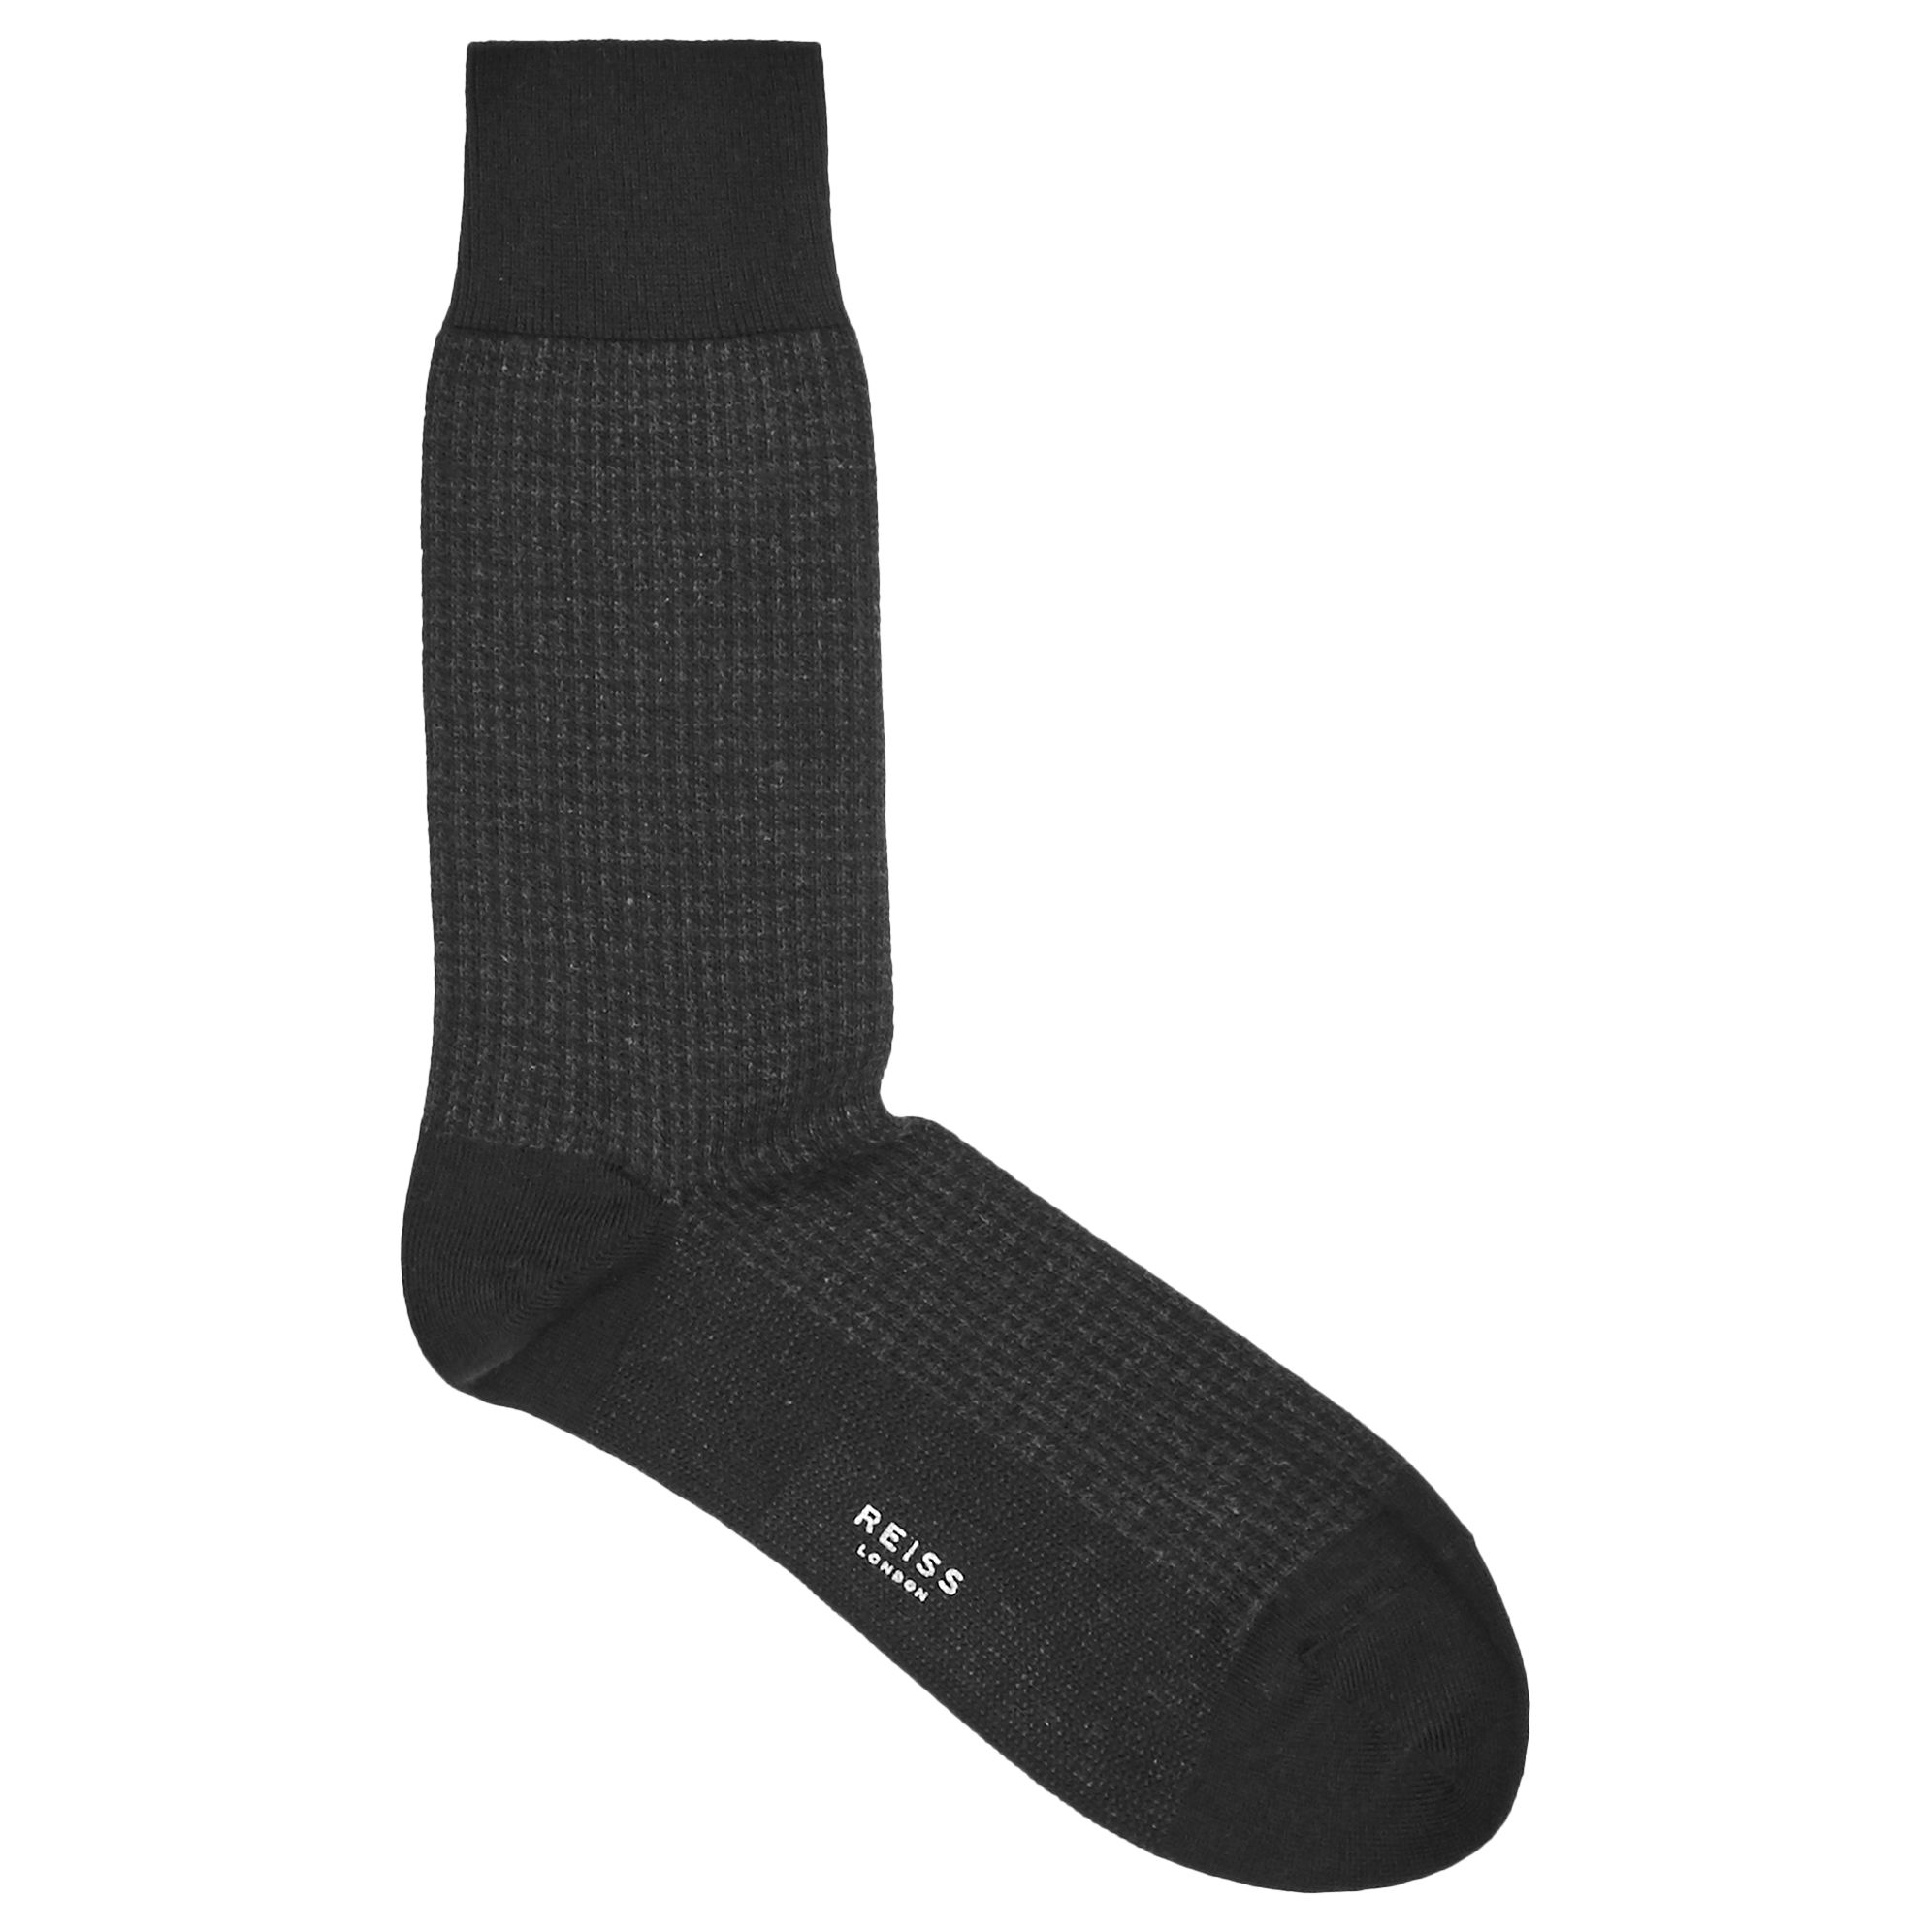 Reiss Brenta Houndstooth Check Socks, One Size, Black